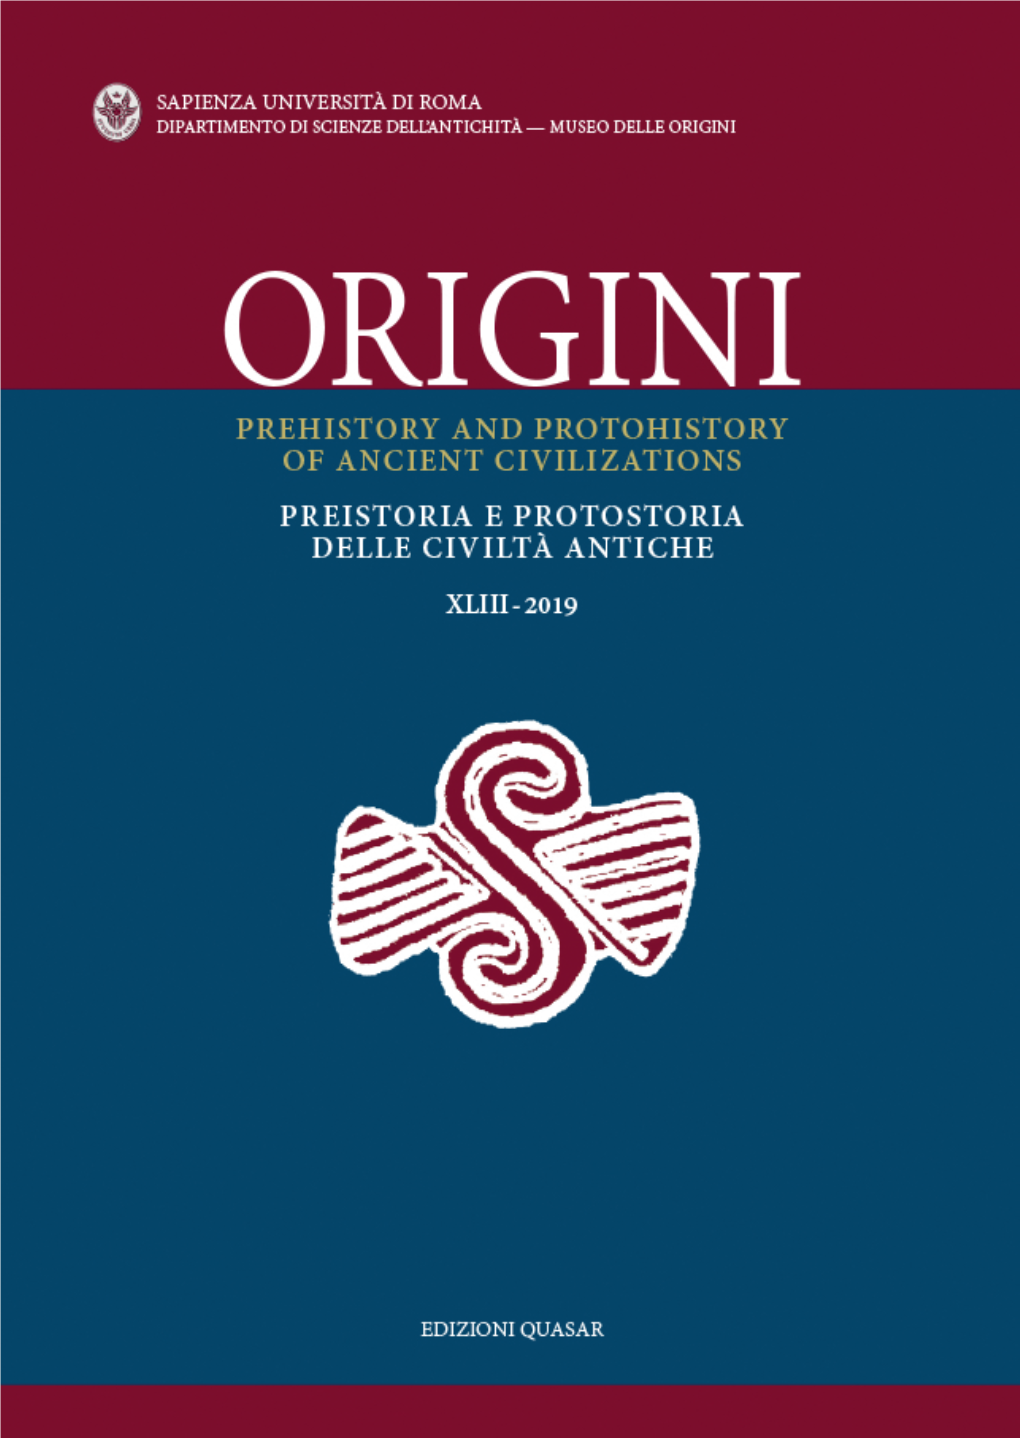 Origini : Prehistory and Protohistory of Ancient Civilizations